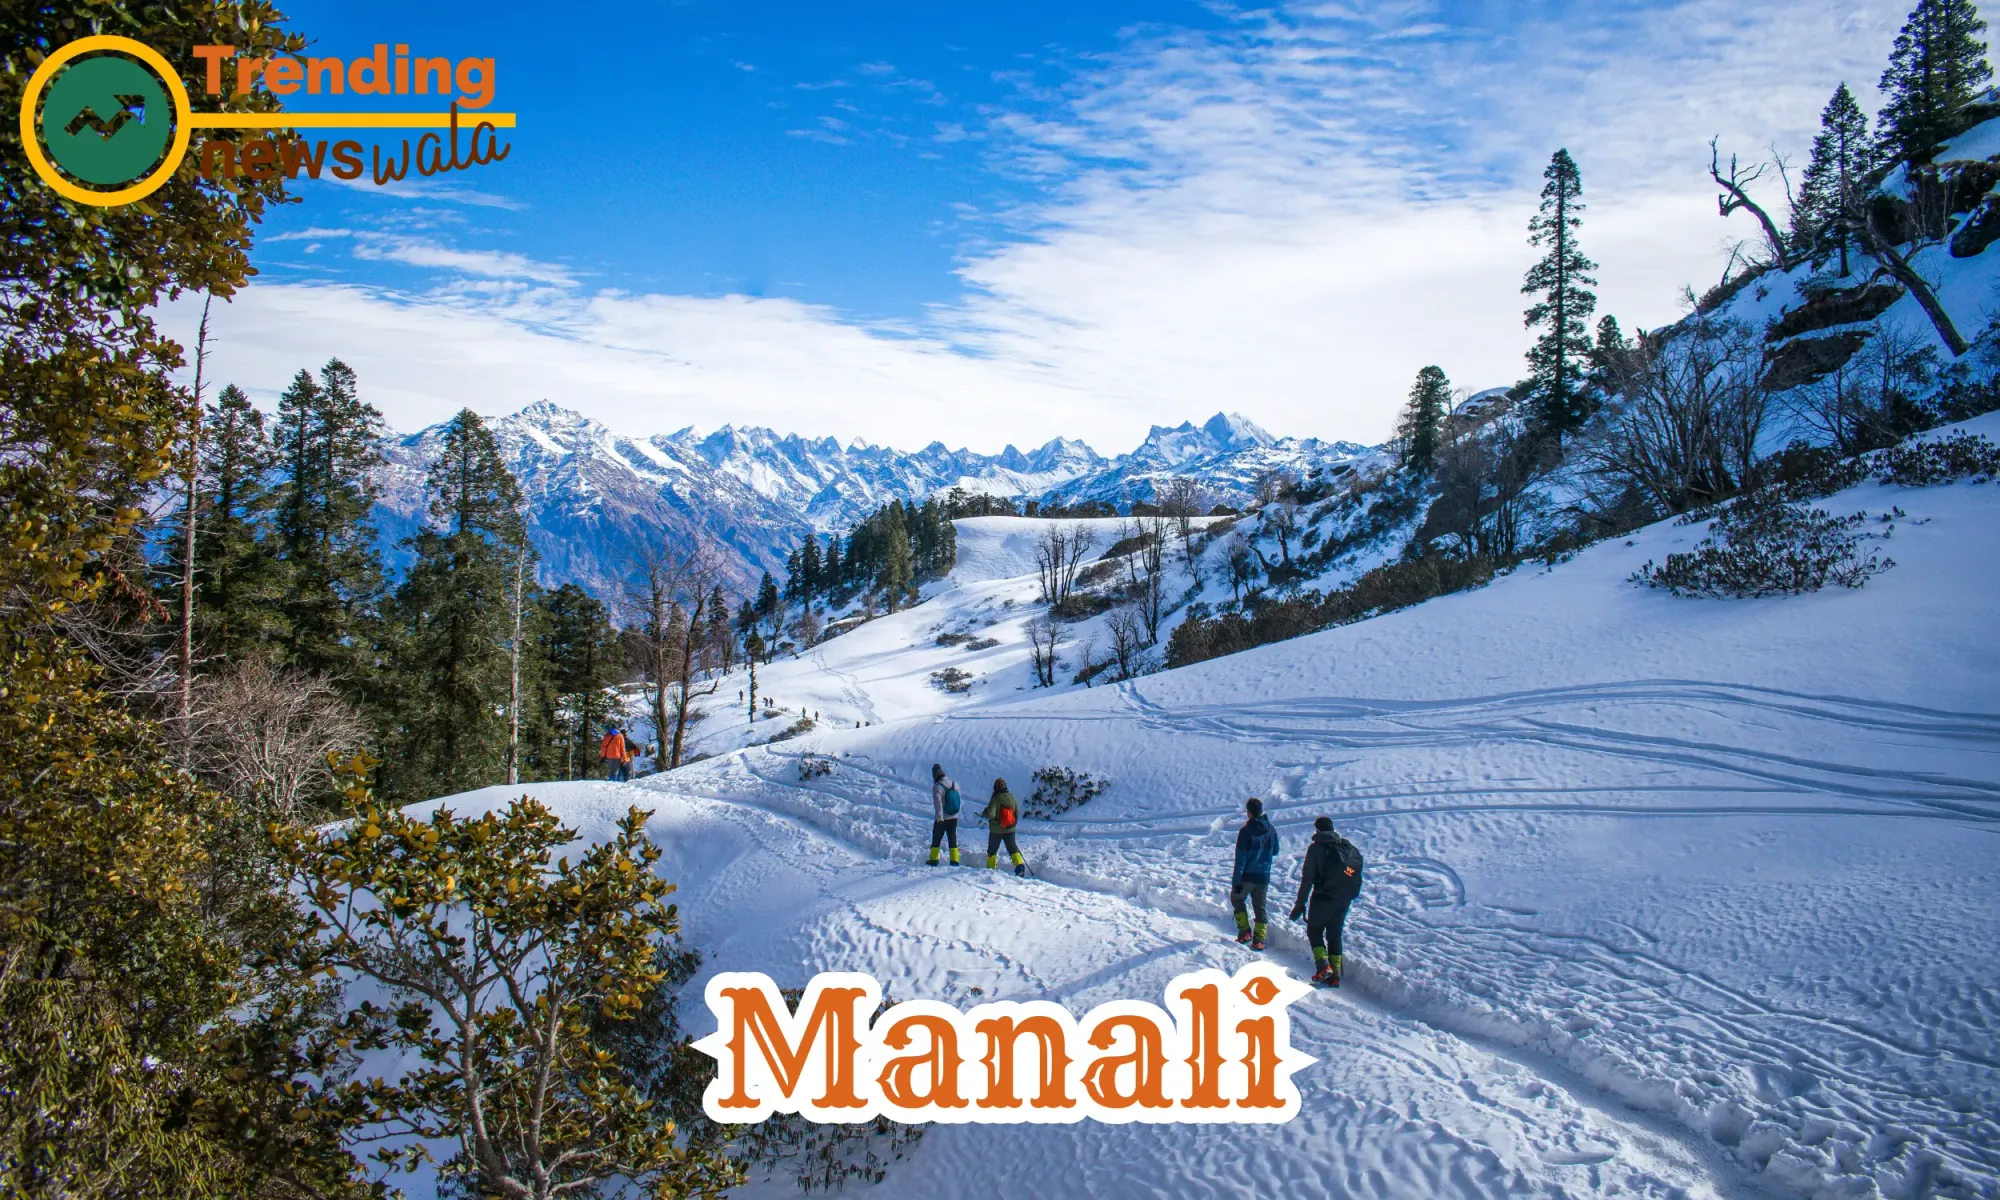 Manali, located in the Kullu Valley of Himachal Pradesh, India